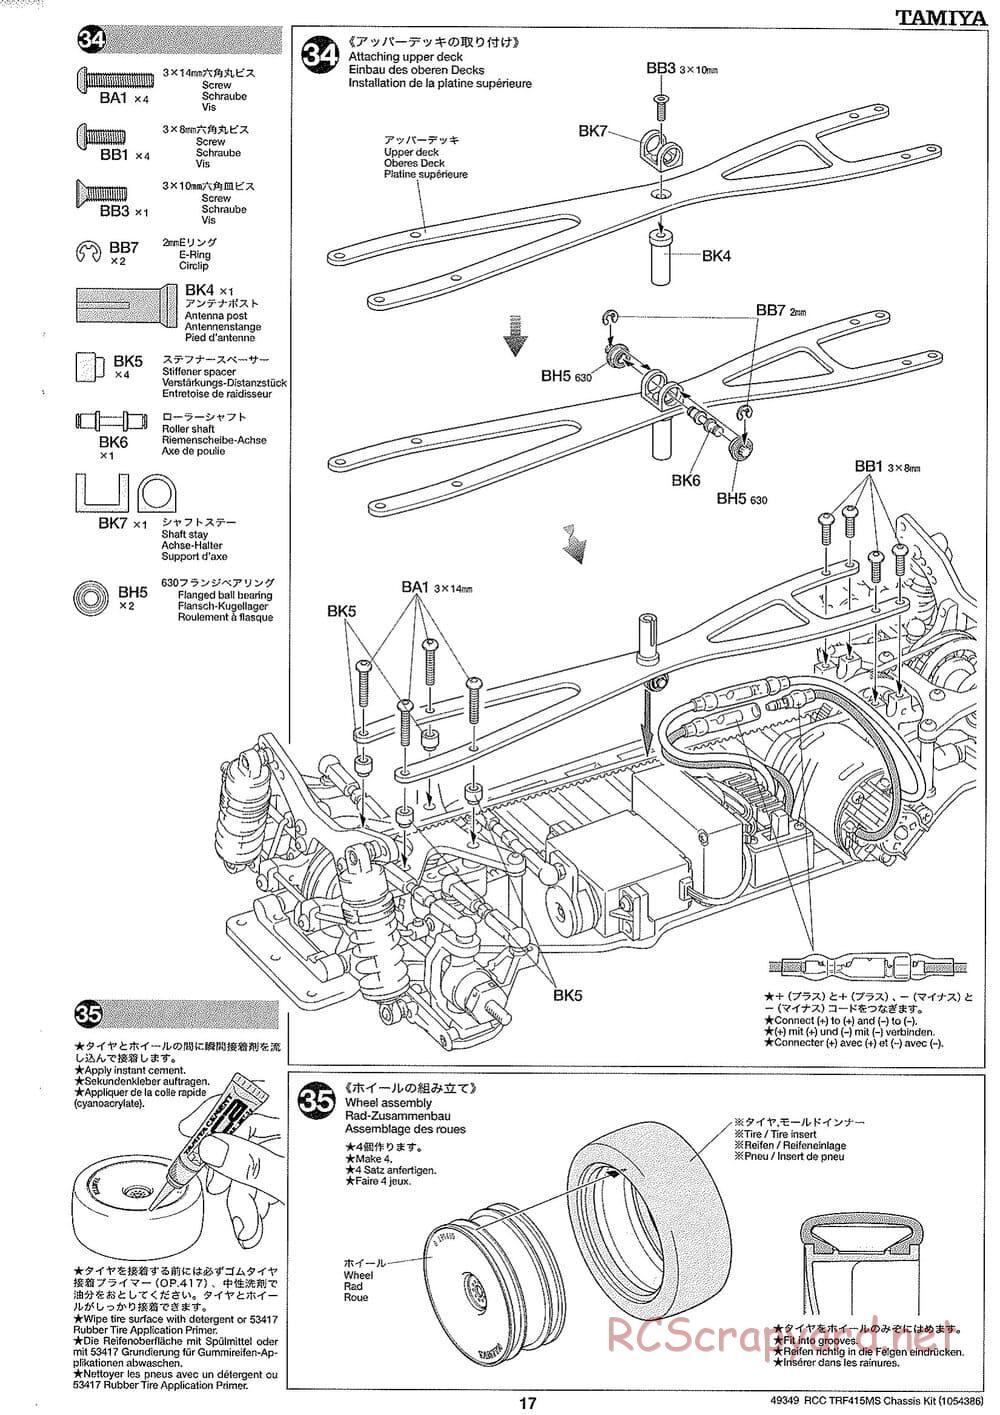 Tamiya - TRF415-MS Chassis - Manual - Page 17